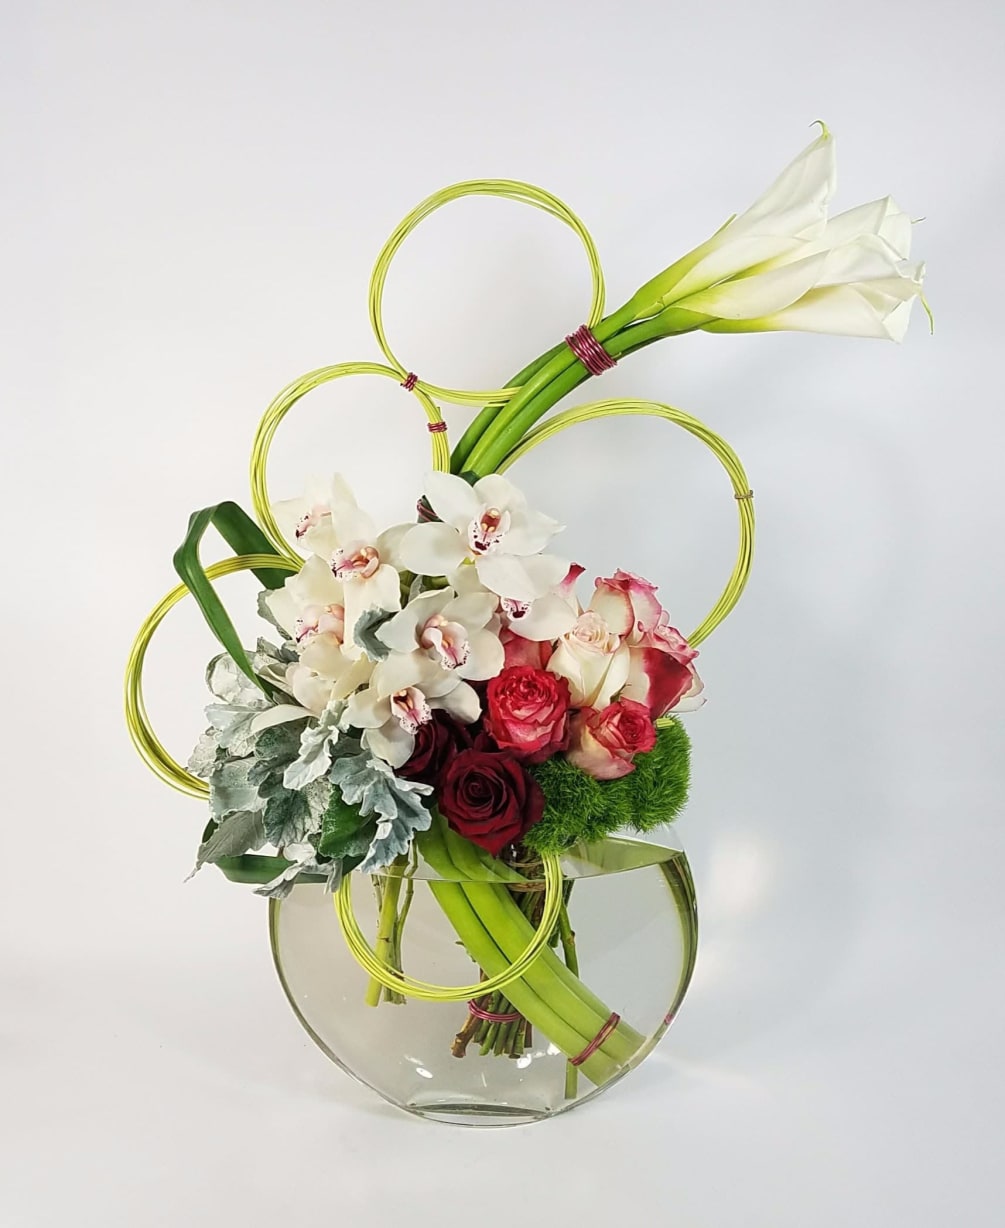 Modern, Playful and Sculptural Floral Arrangement of White Callas, White Cymbidium Orchids